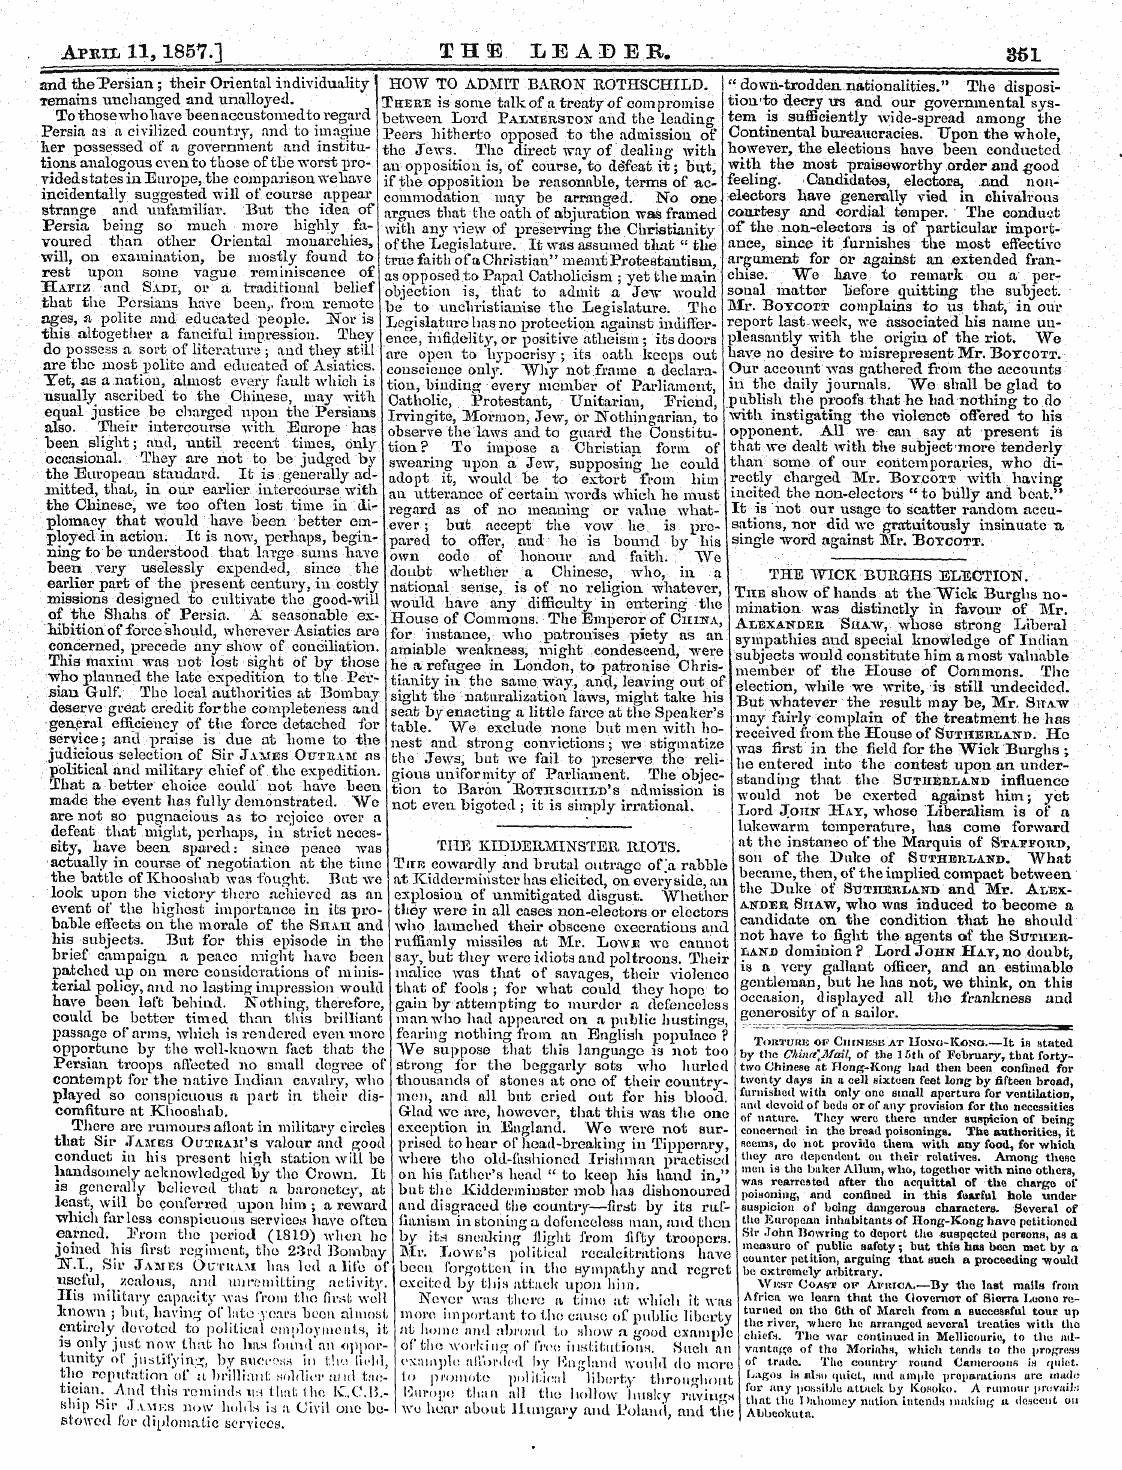 Leader (1850-1860): jS F Y, 2nd edition - Apbix 11,185?.] The Leapeb. 361